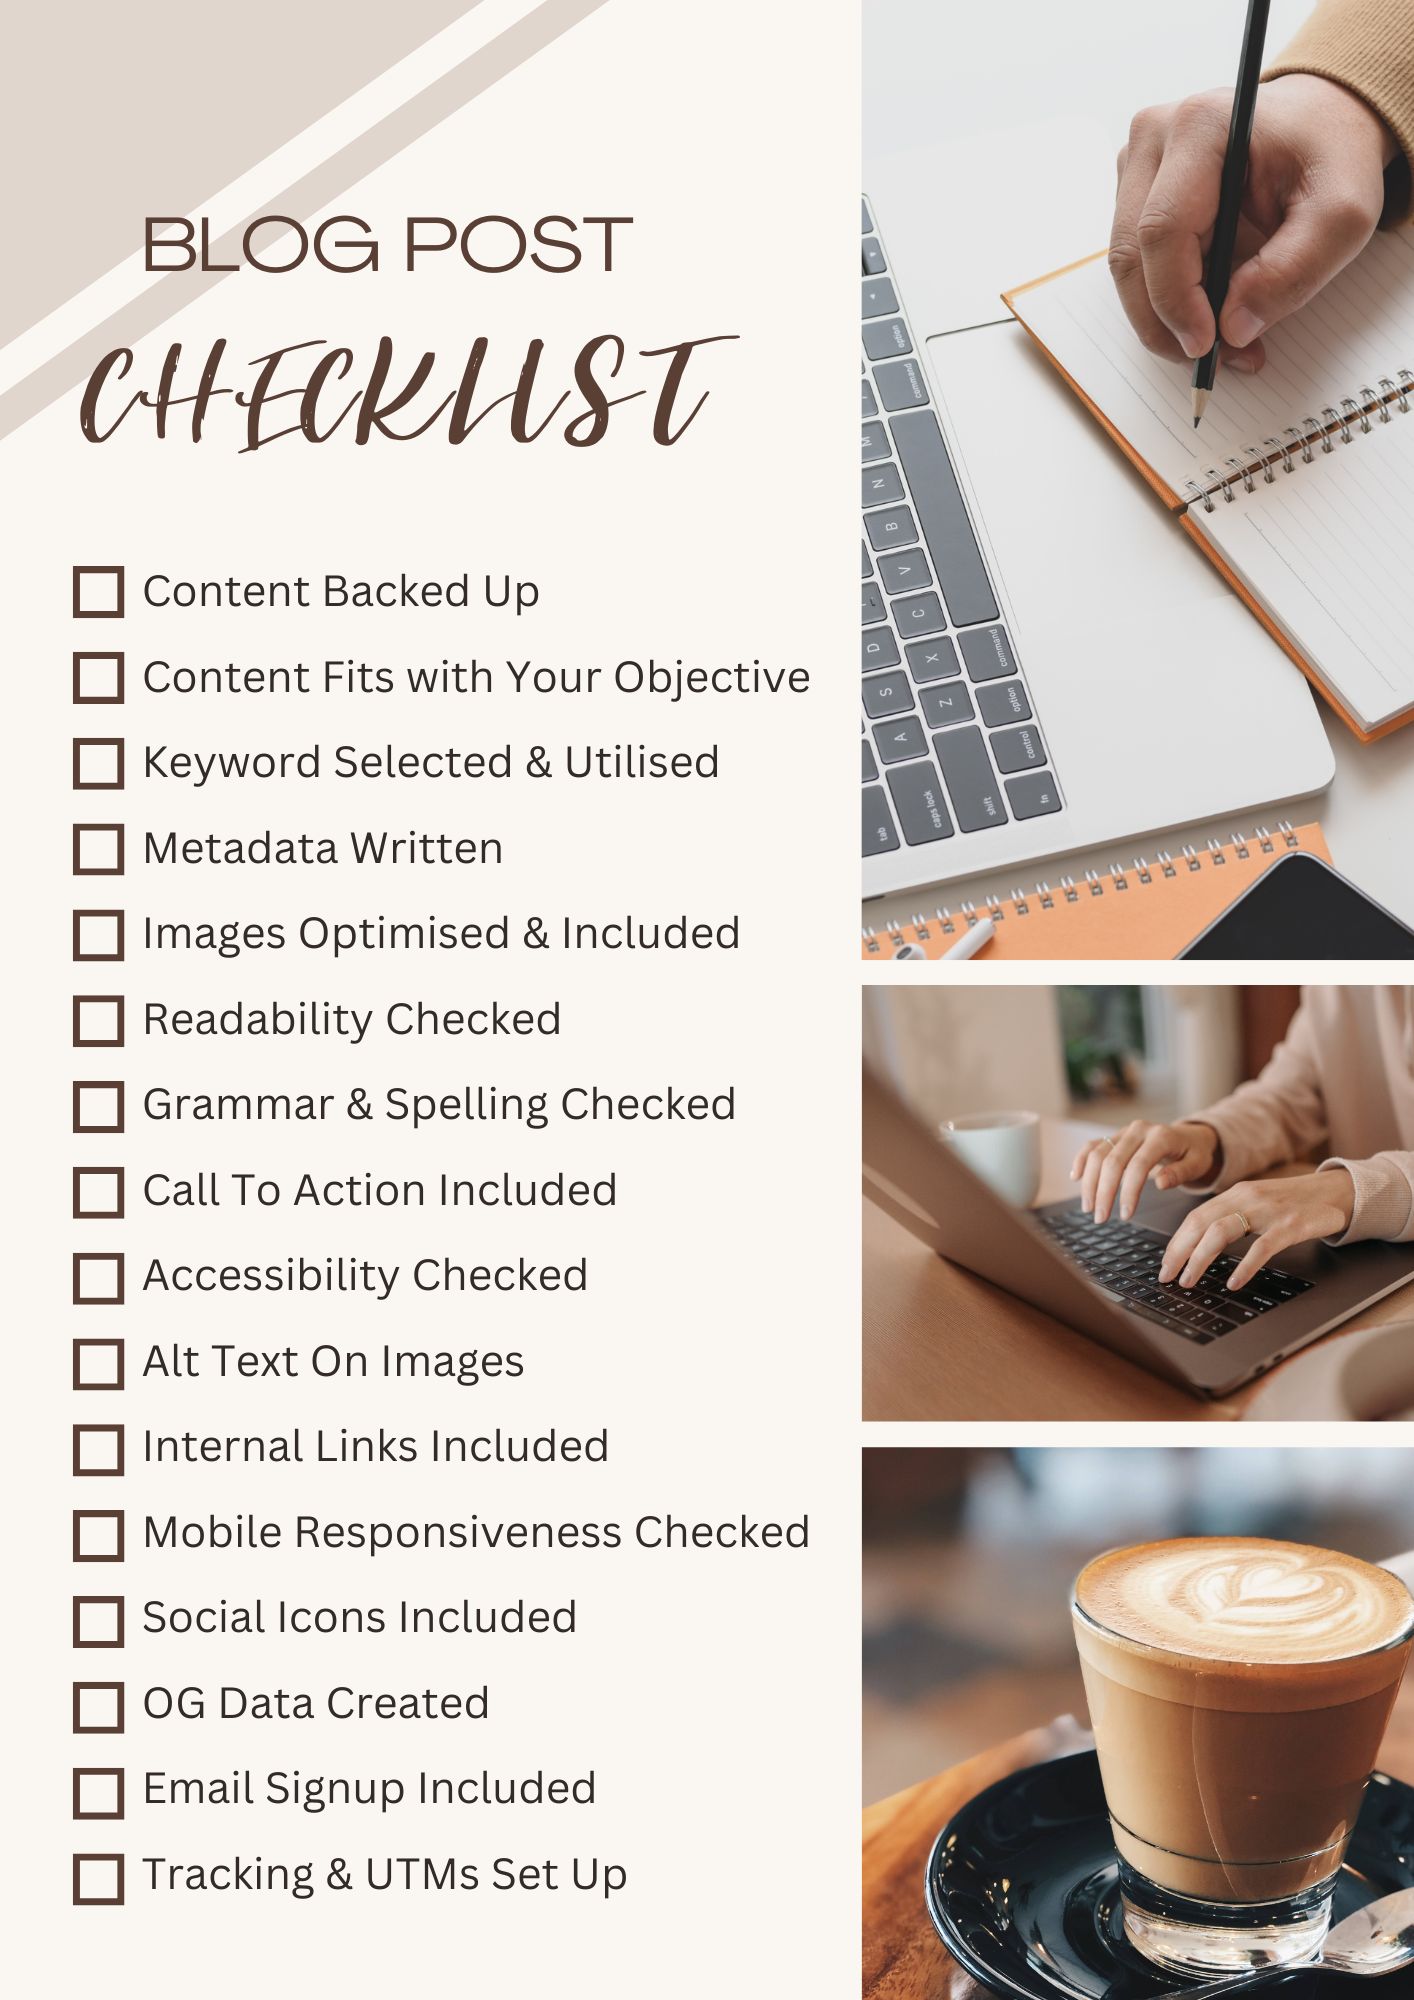 The 12 Point Blog Pre-Publish Checklist Download